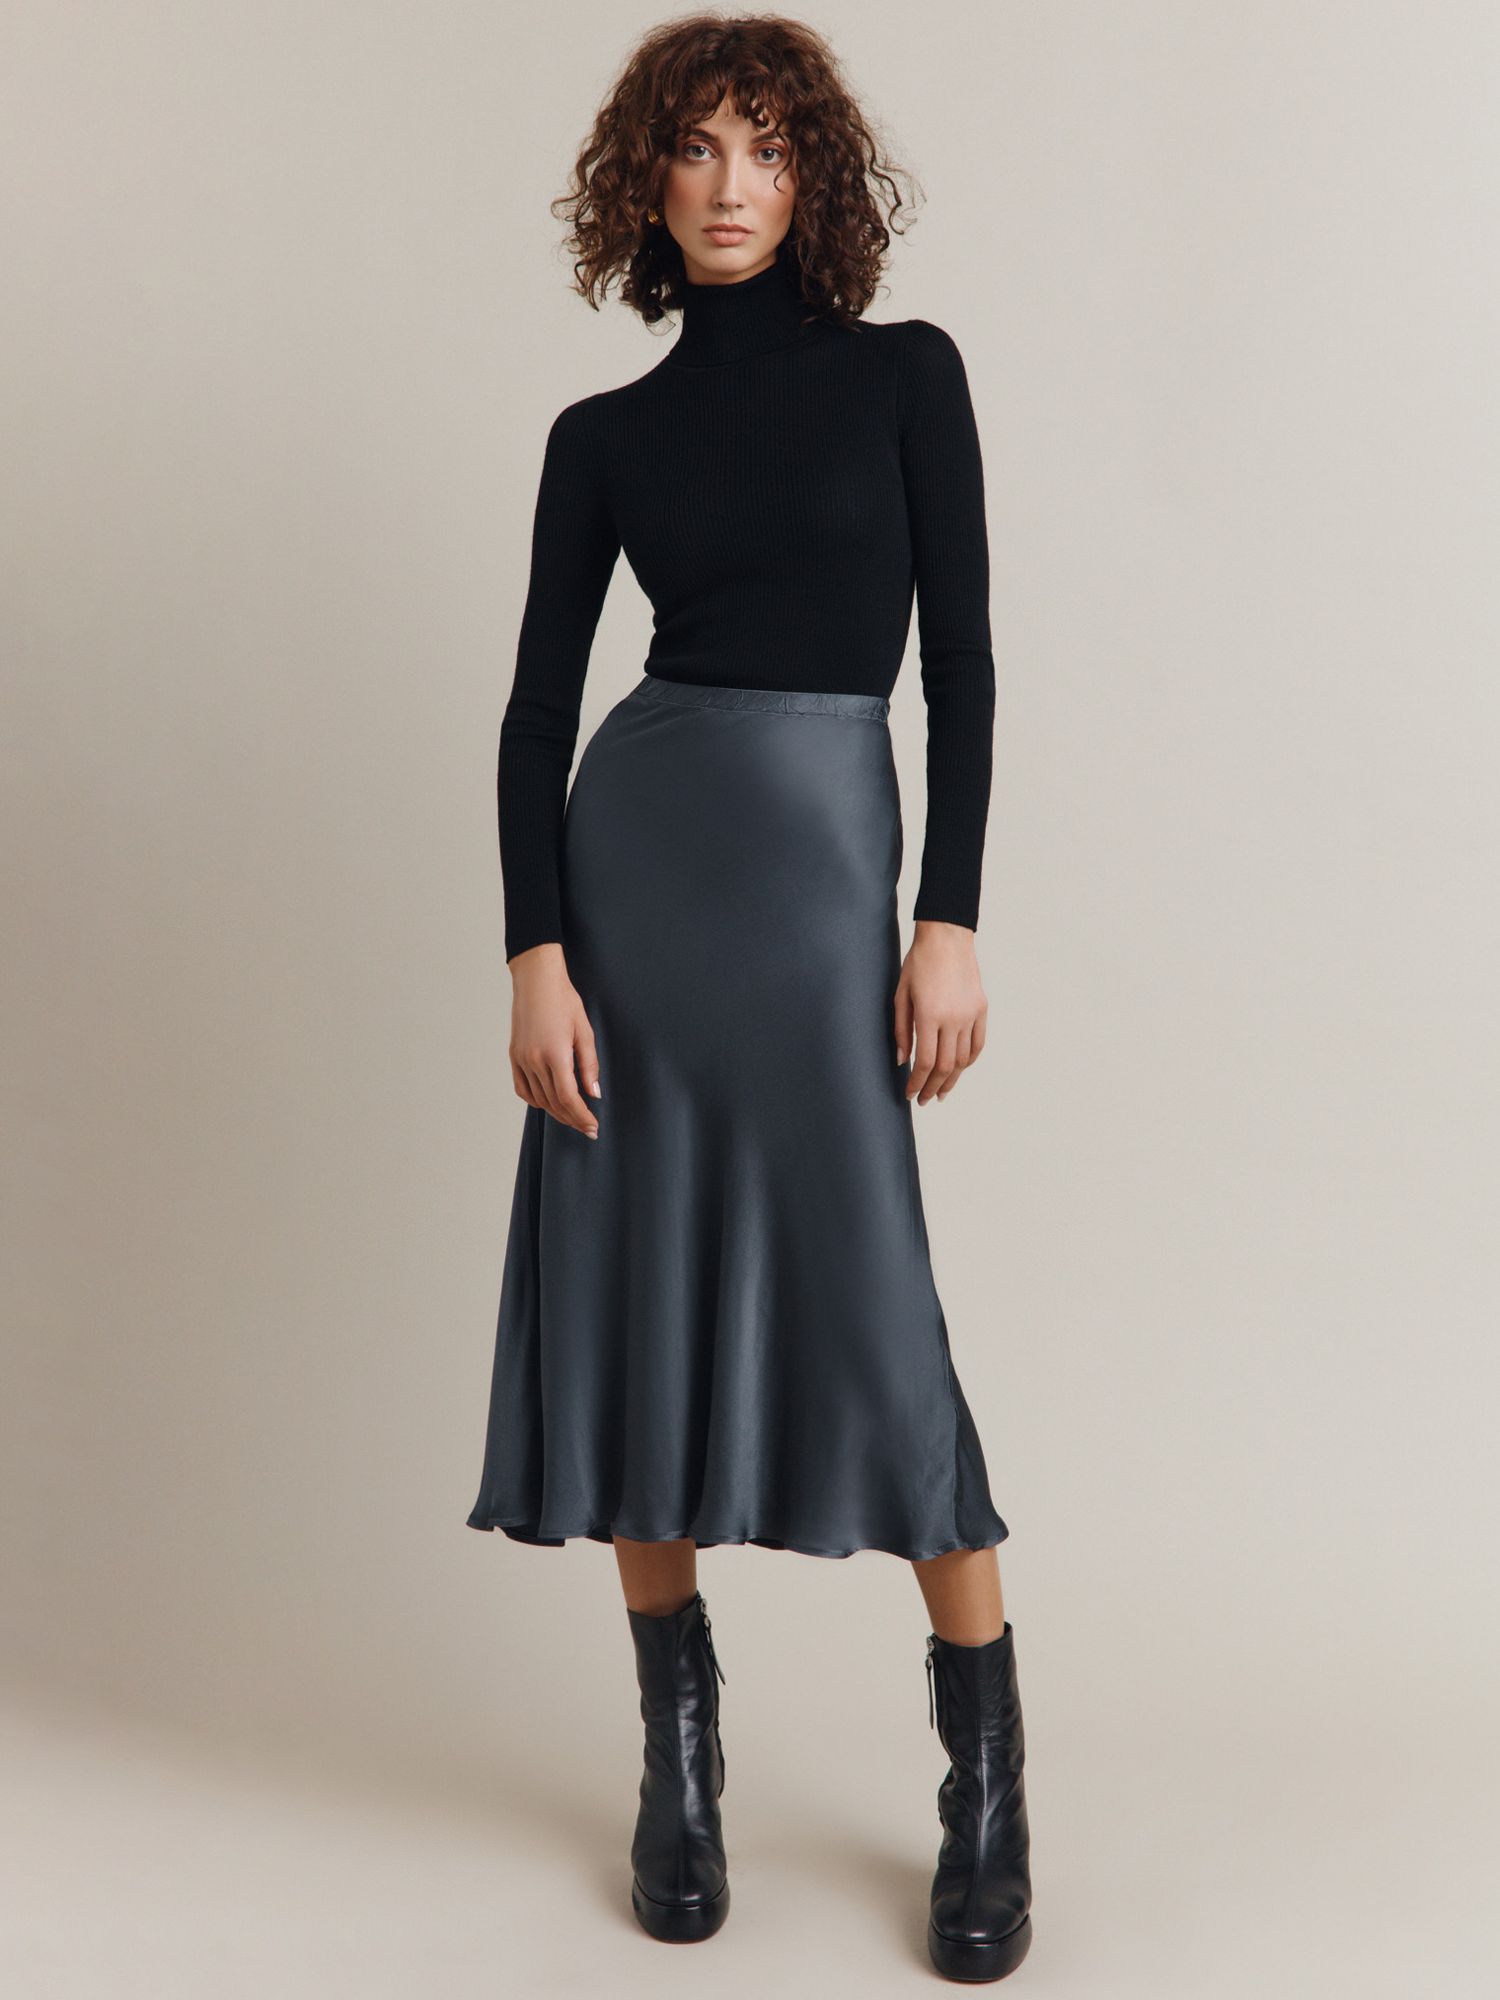 Ghost Luna Satin Midi Skirt, Charcoal at John Lewis & Partners